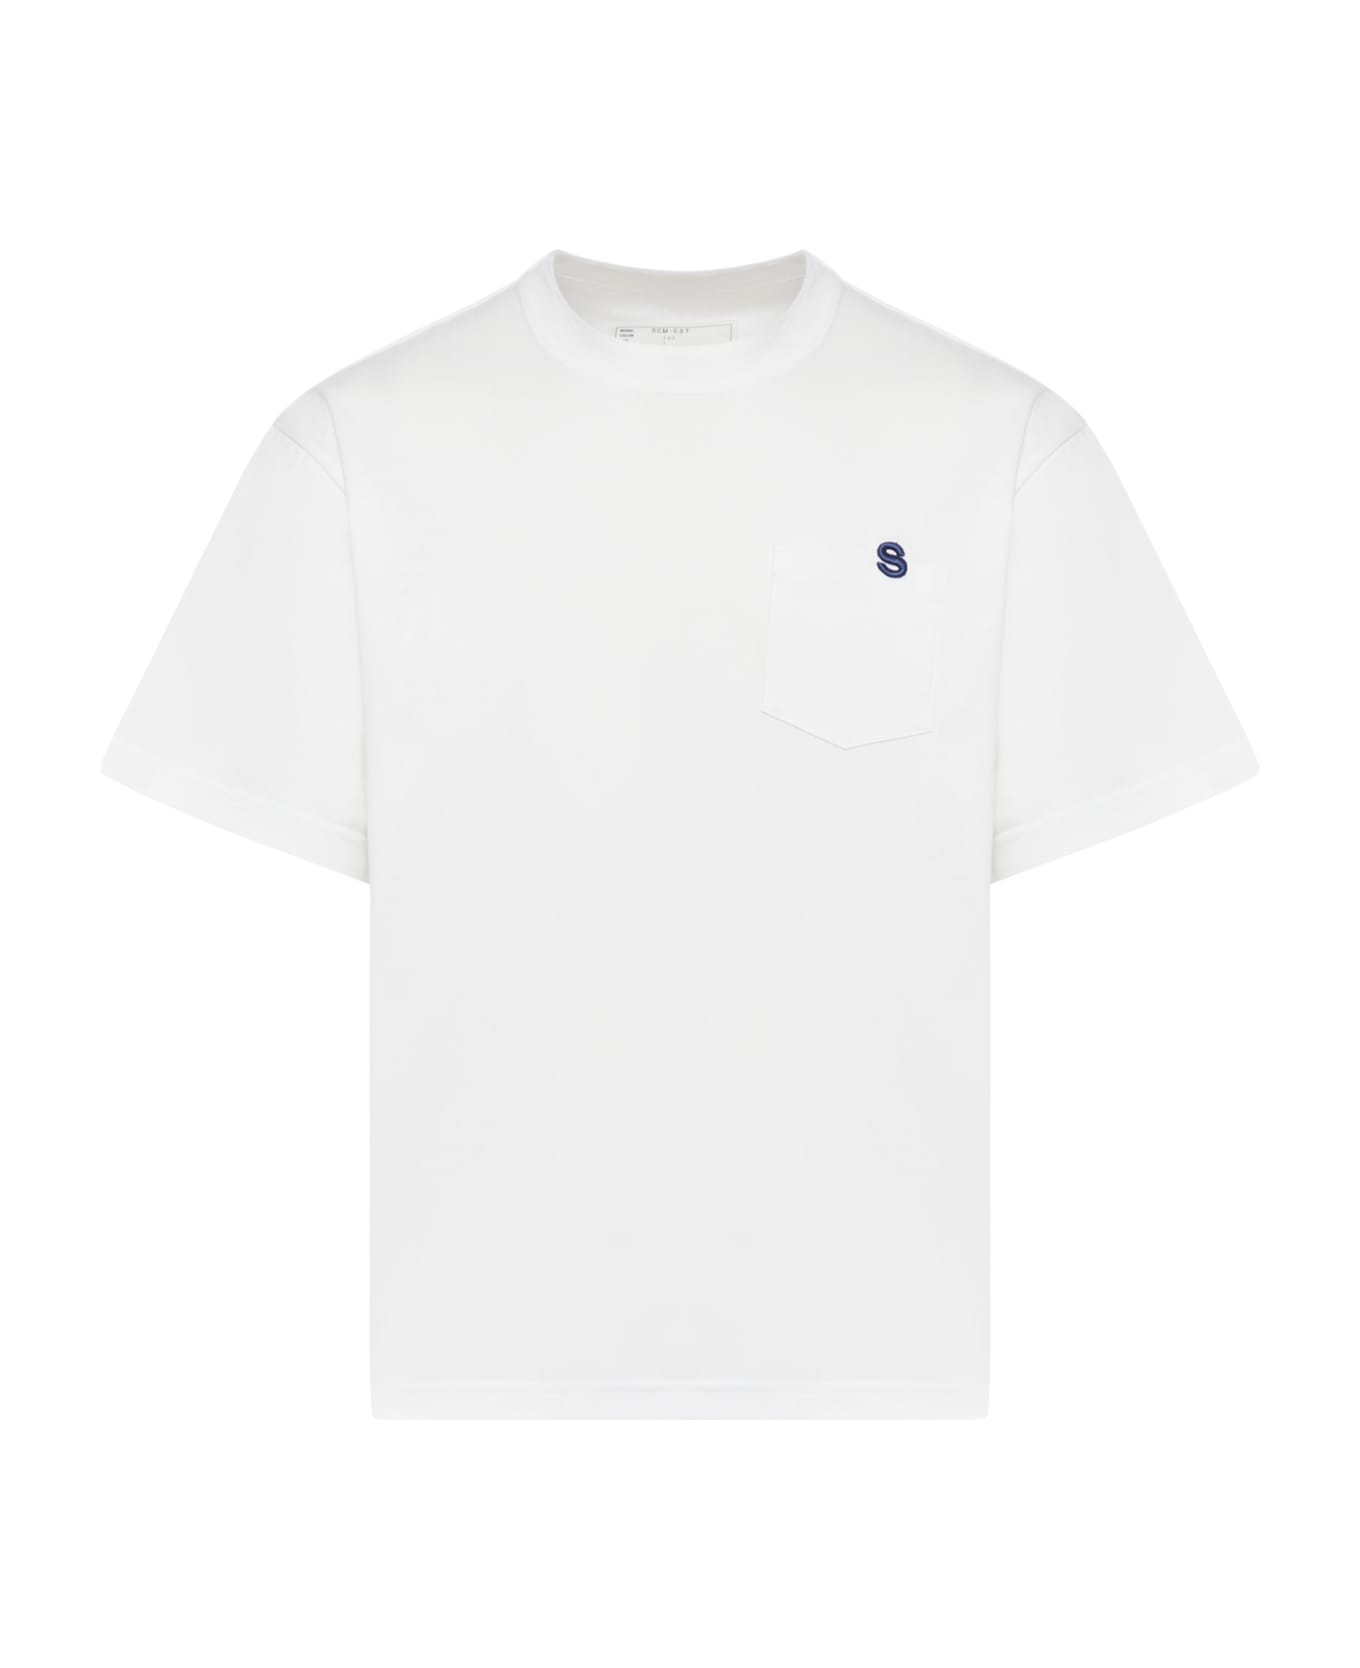 Sacai S Cotton Jersey T-shirt - White